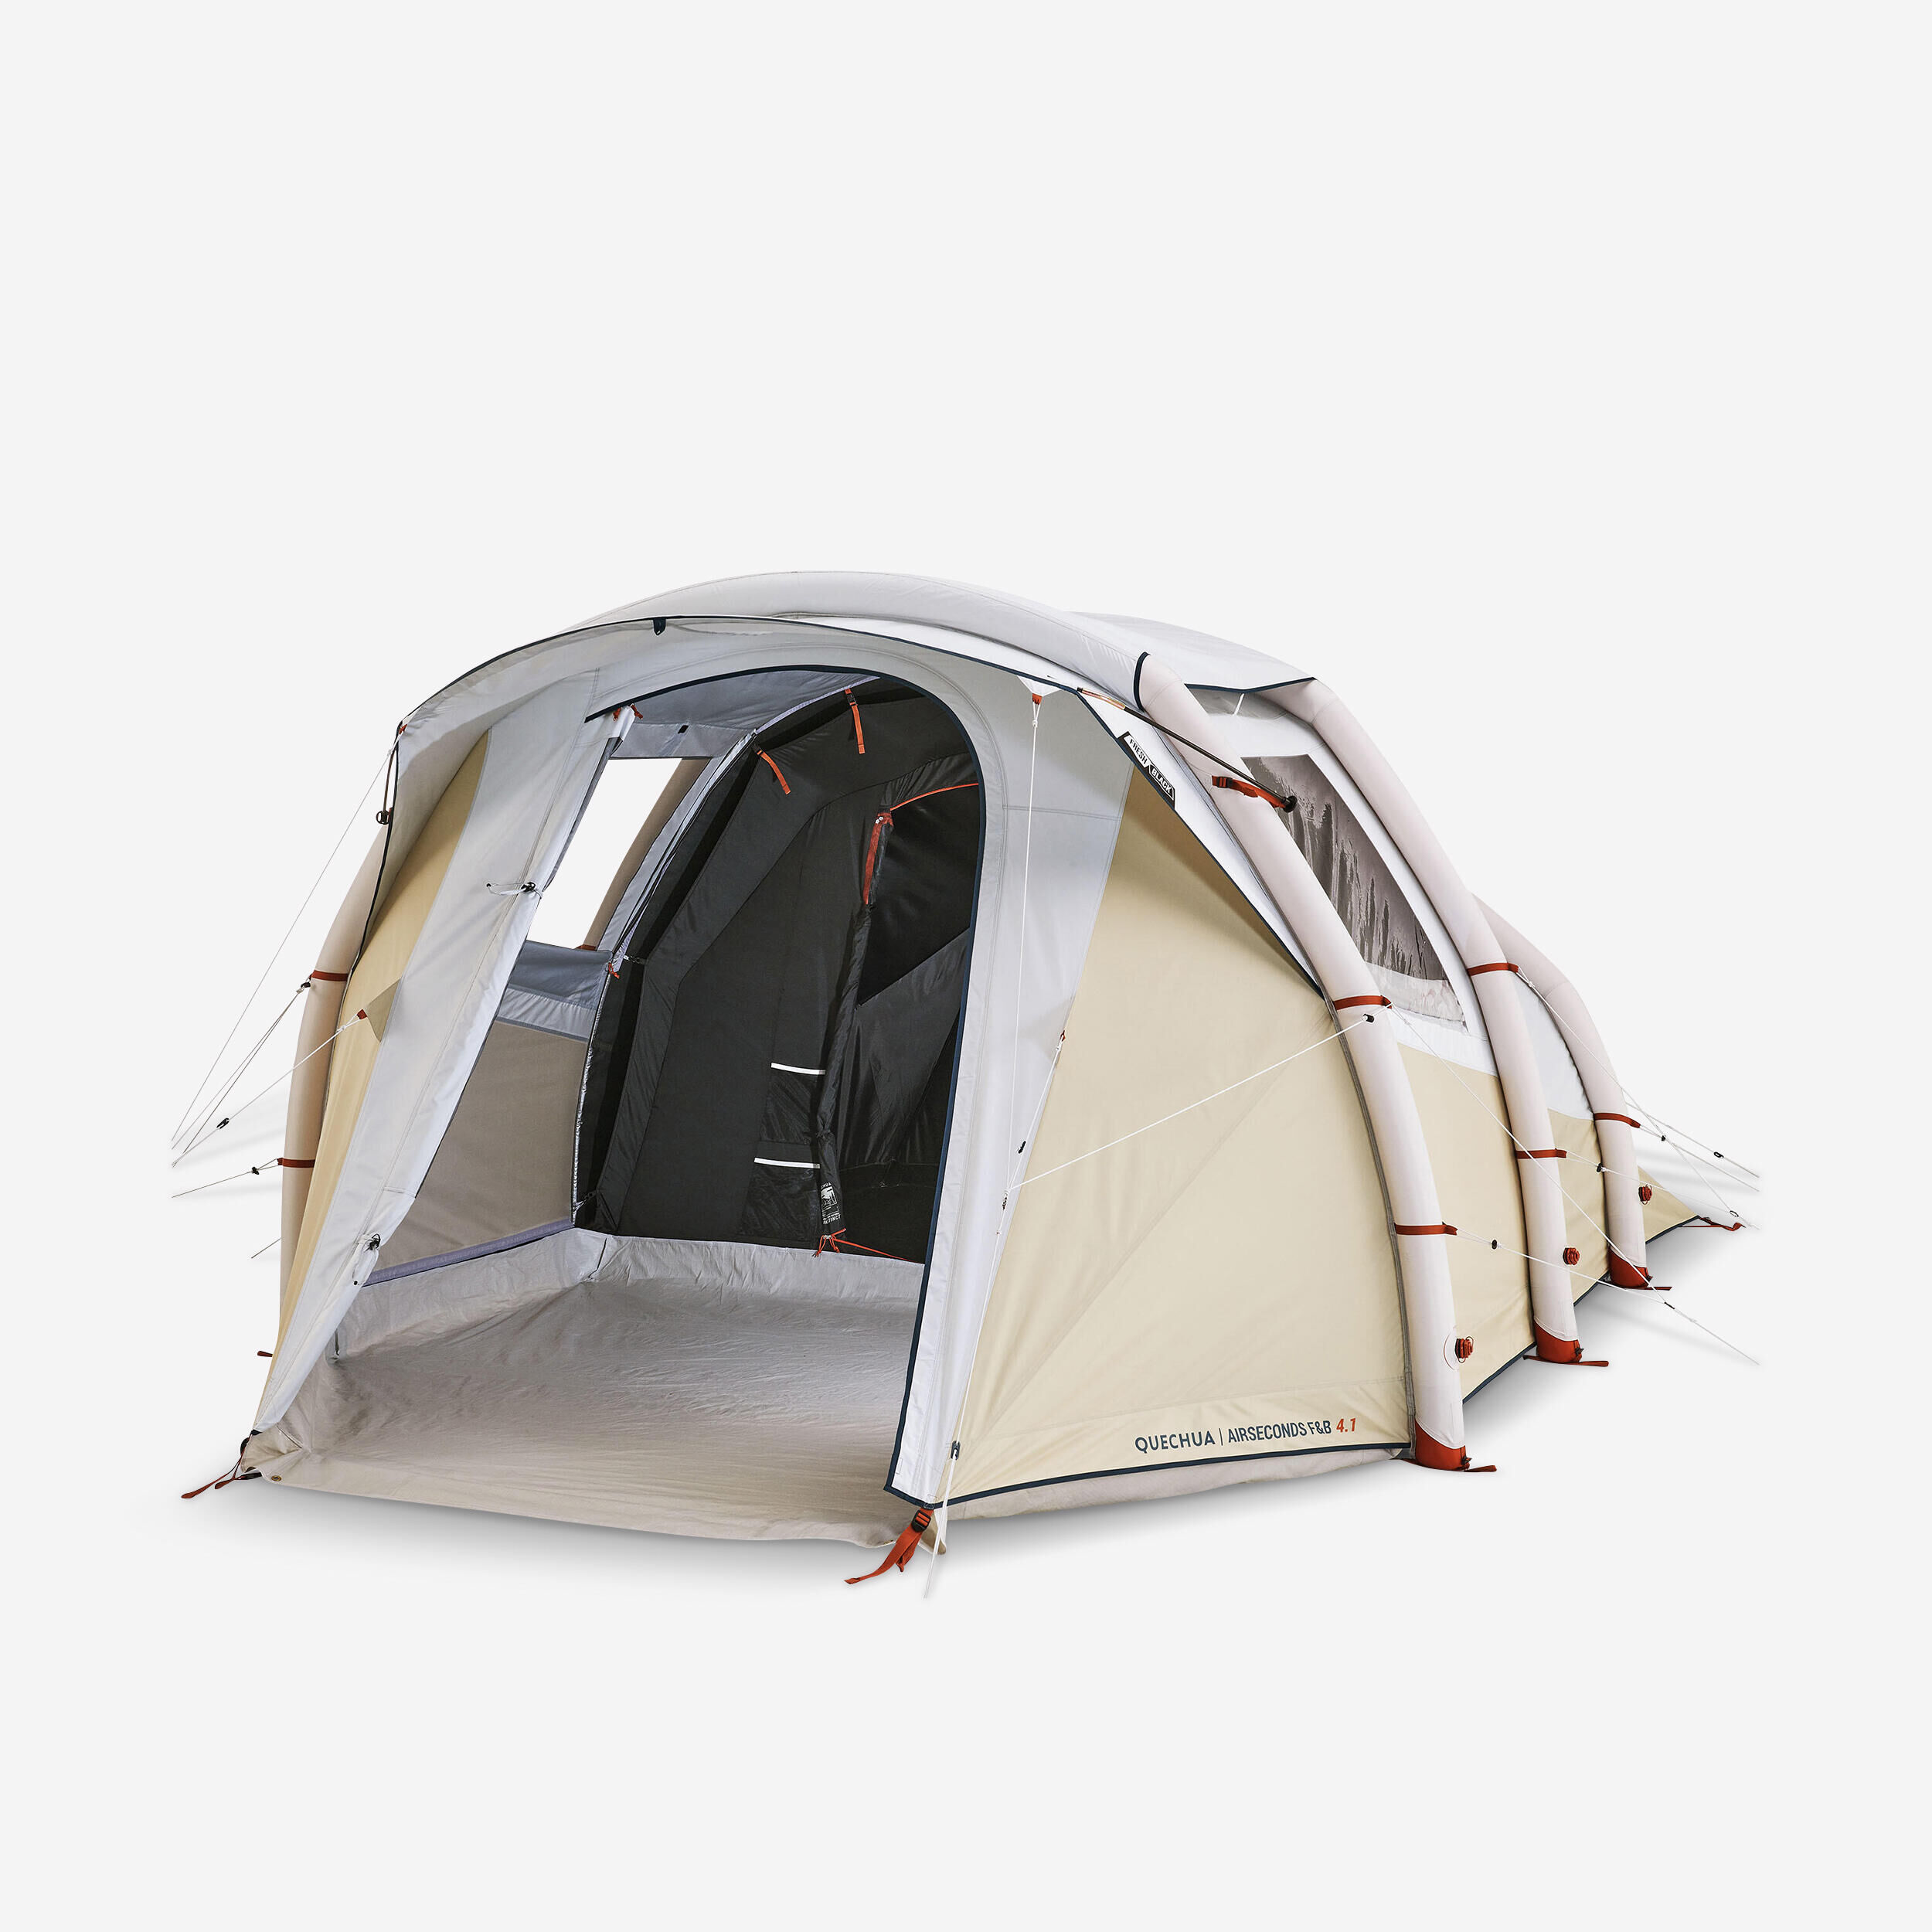 Camping Tents - Decathlon